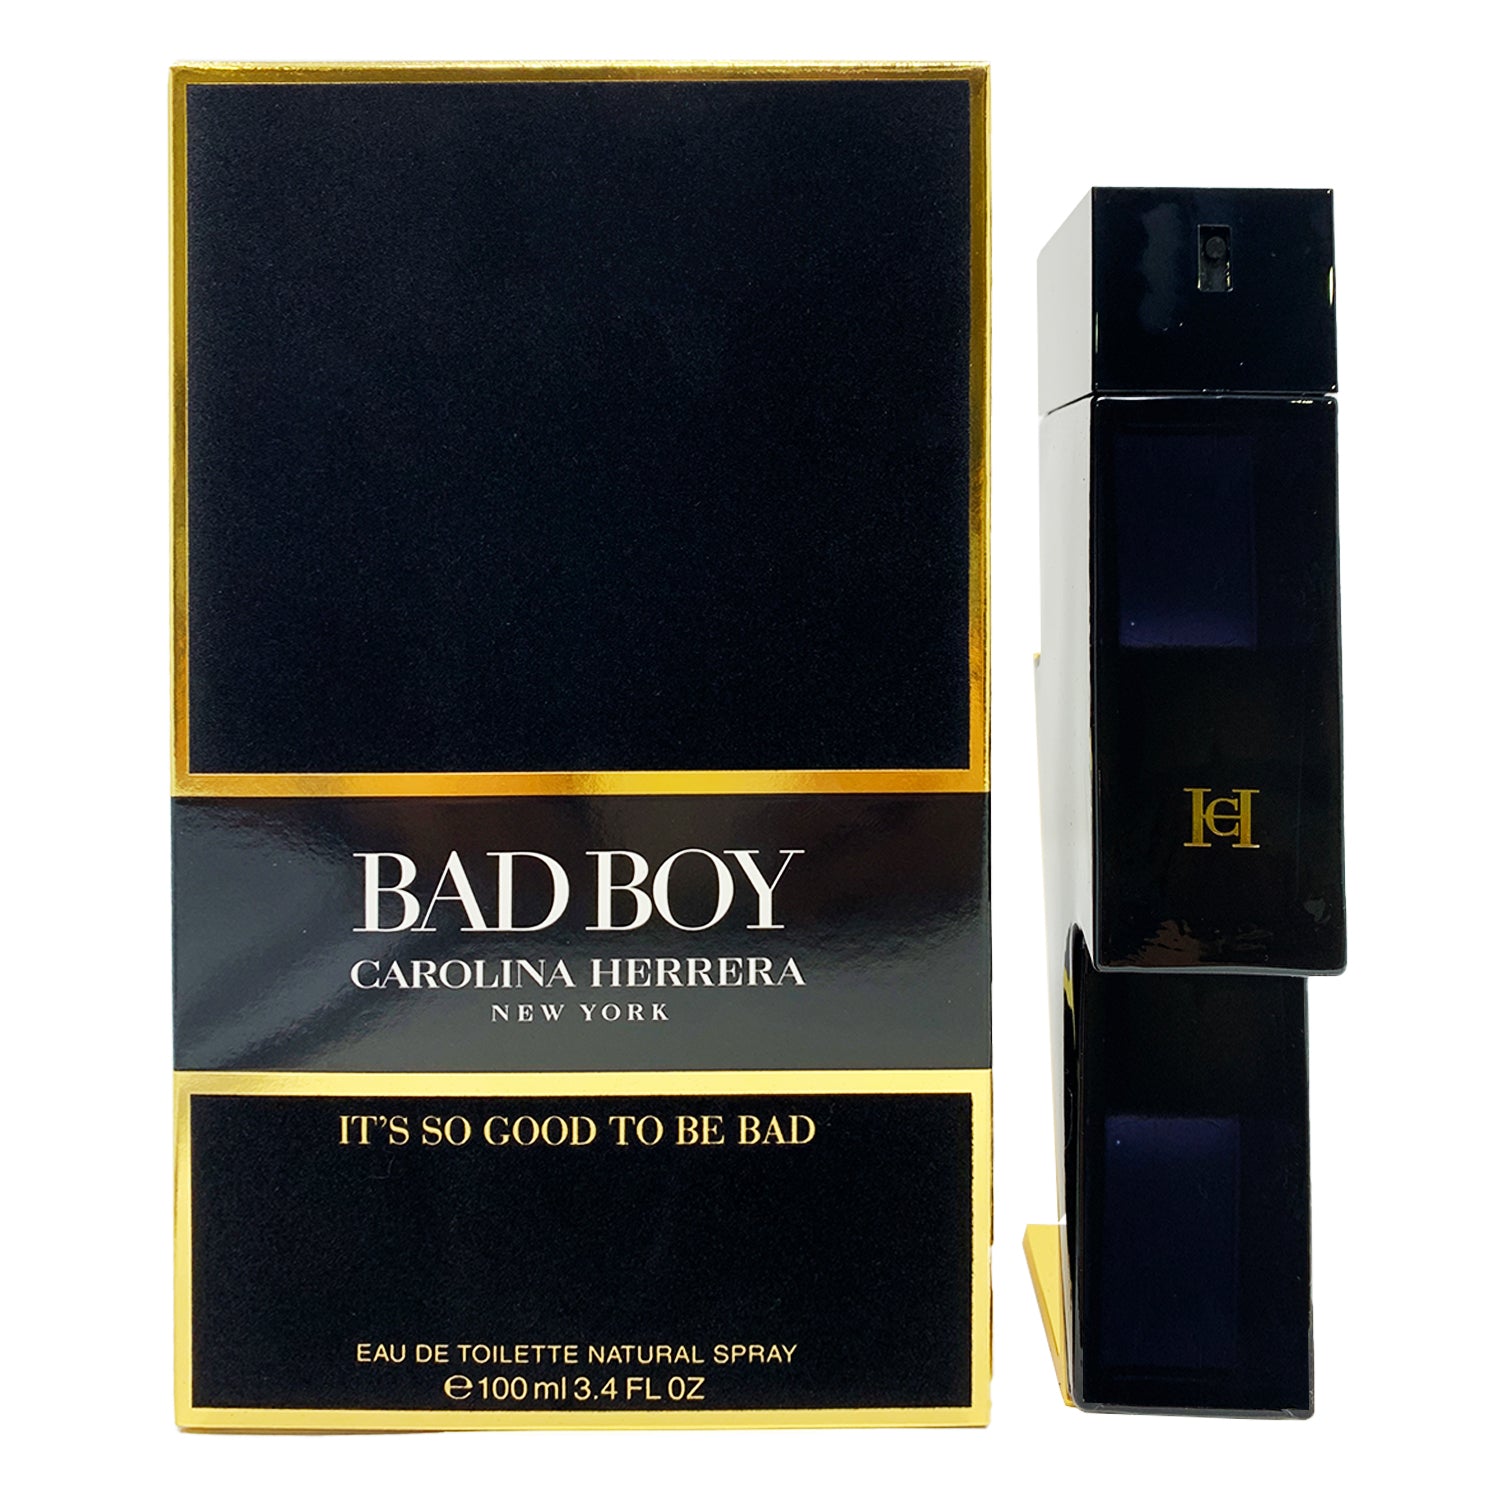 Bad Boy by Carolina Herrera 3.4 oz Eau de Toilette Spray / Men